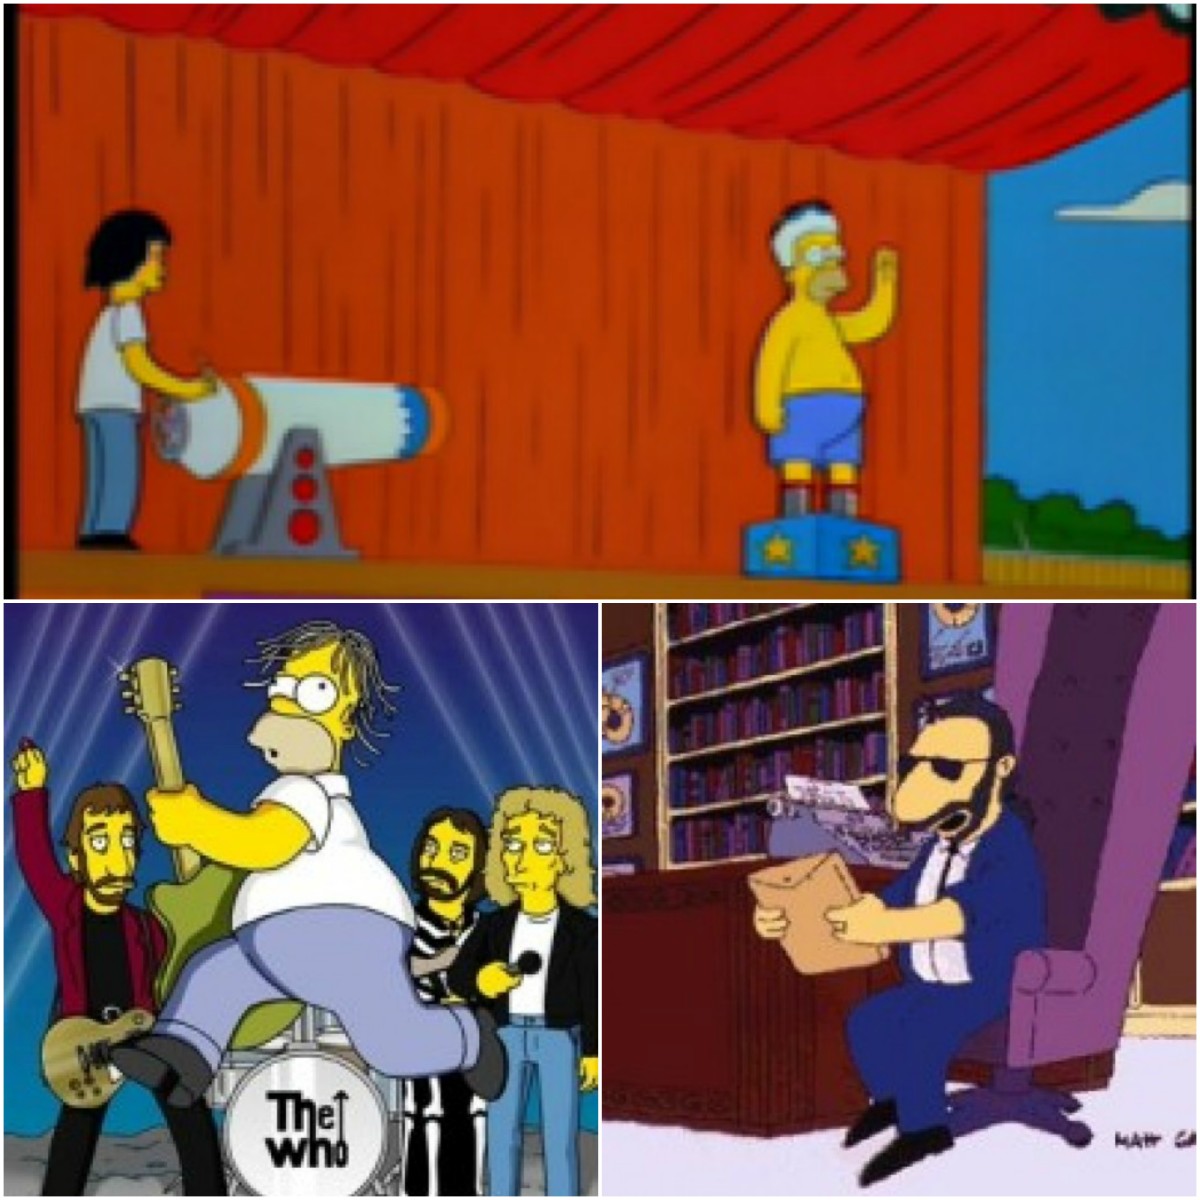 Top: Homer at Hullabalooza, bottom left: The Who, bottom right: Ringo Starr